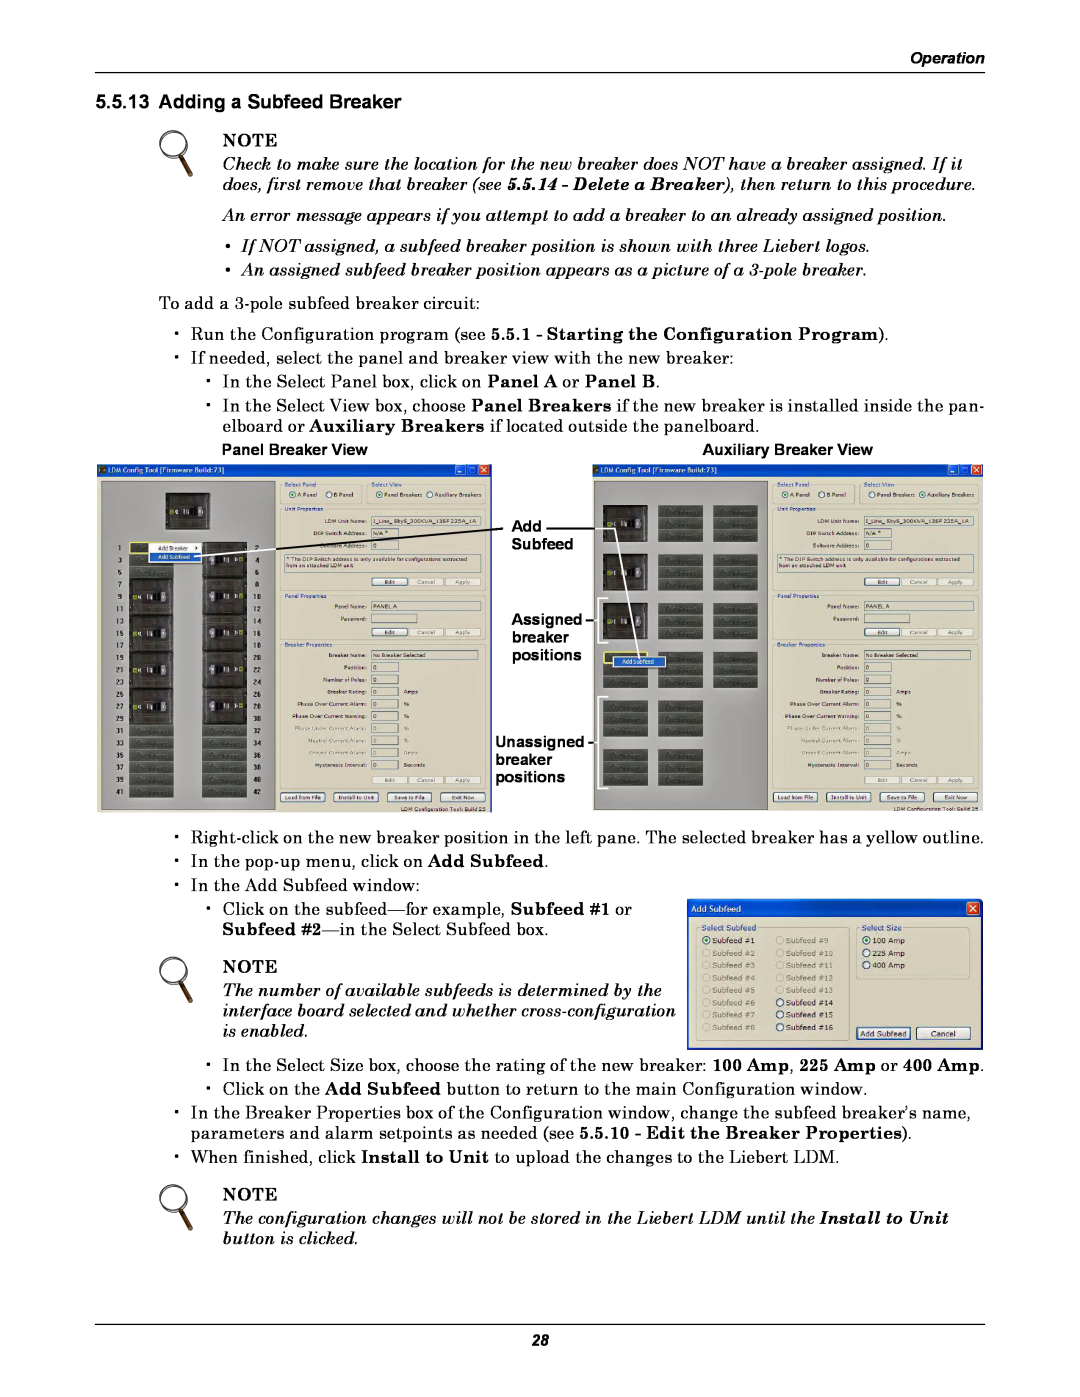 Liebert LDM user manual Adding a Subfeed Breaker, Panel Breaker View, Auxiliary Breaker View 